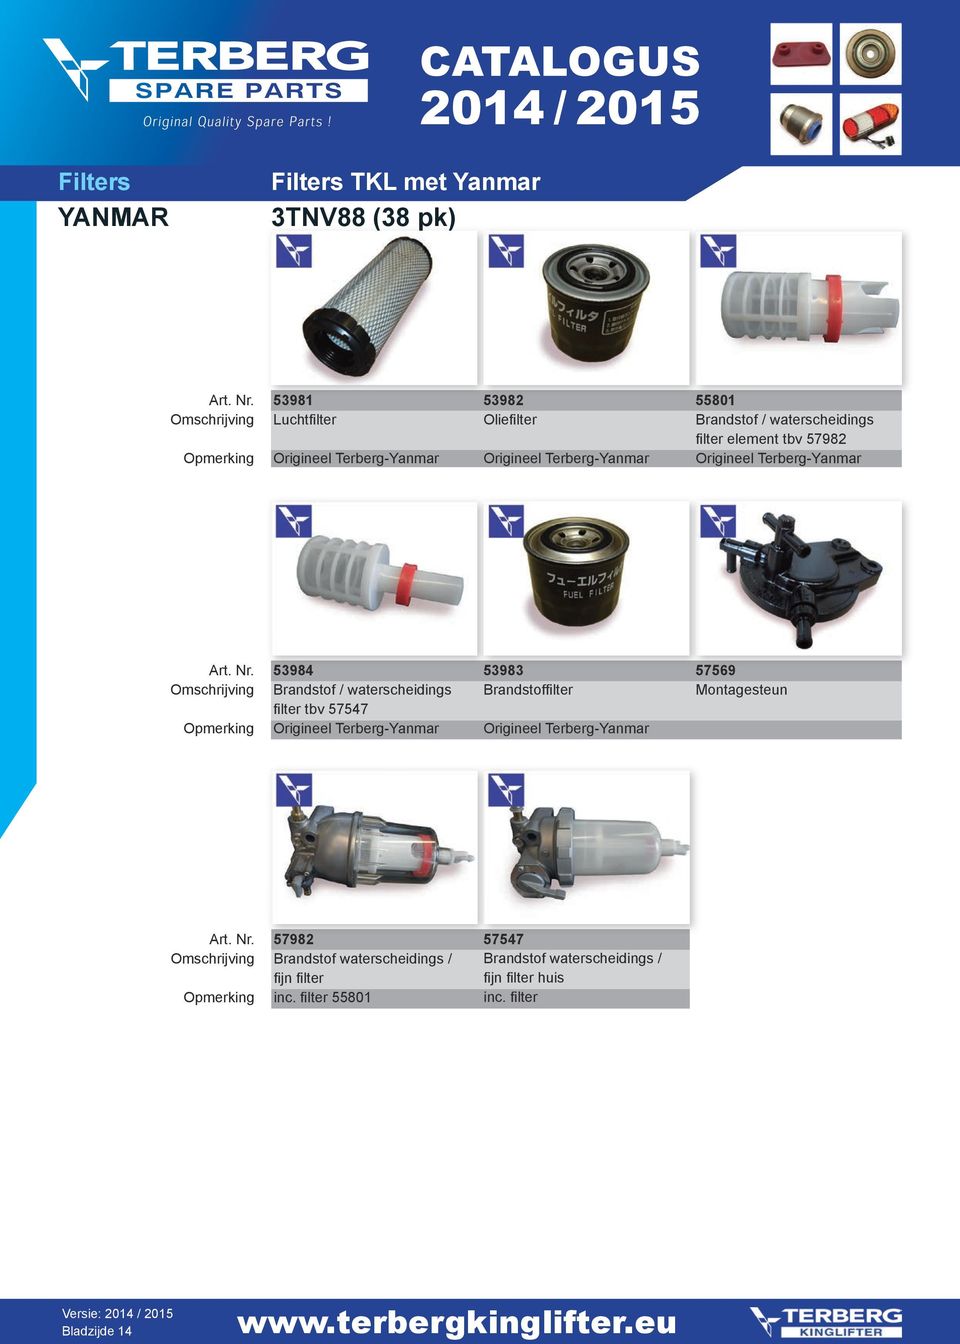 waterscheidings filter tbv 57547 Origineel Terberg-Yanmar 53983 Brandstoffilter Origineel Terberg-Yanmar 57569 Montagesteun